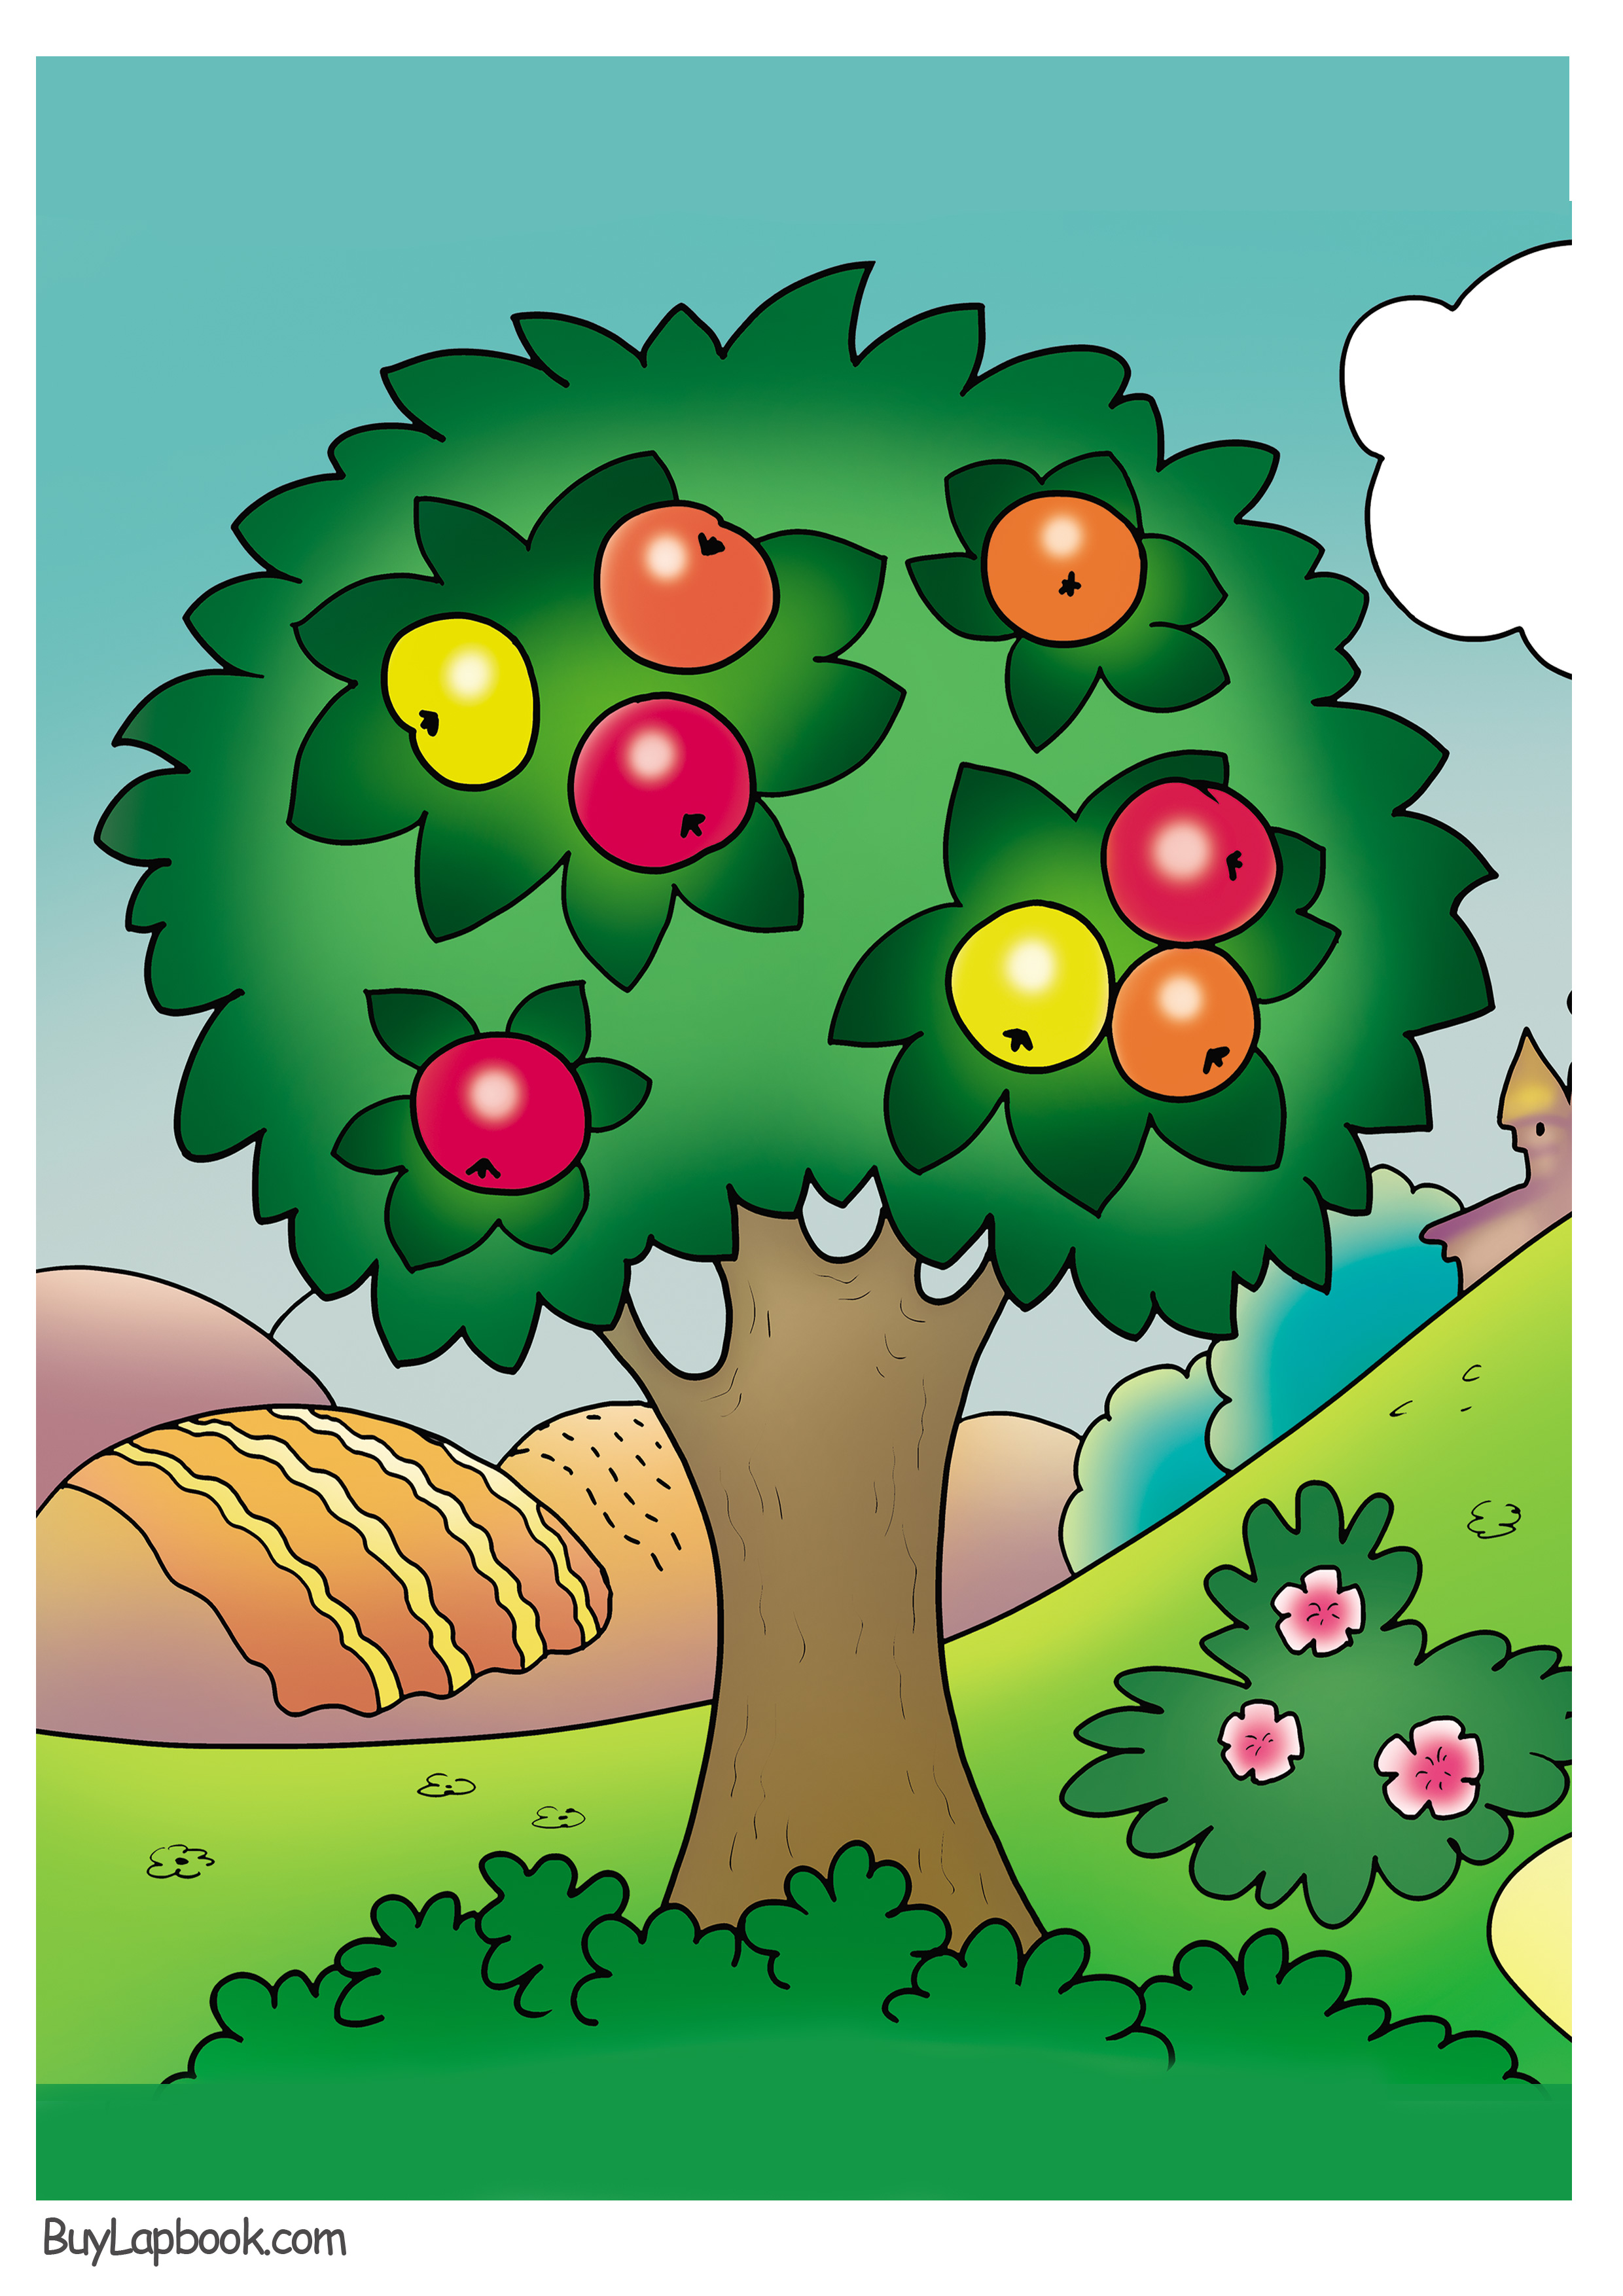 Apple Tree Coloring Page Free Printable   BuyLapbook